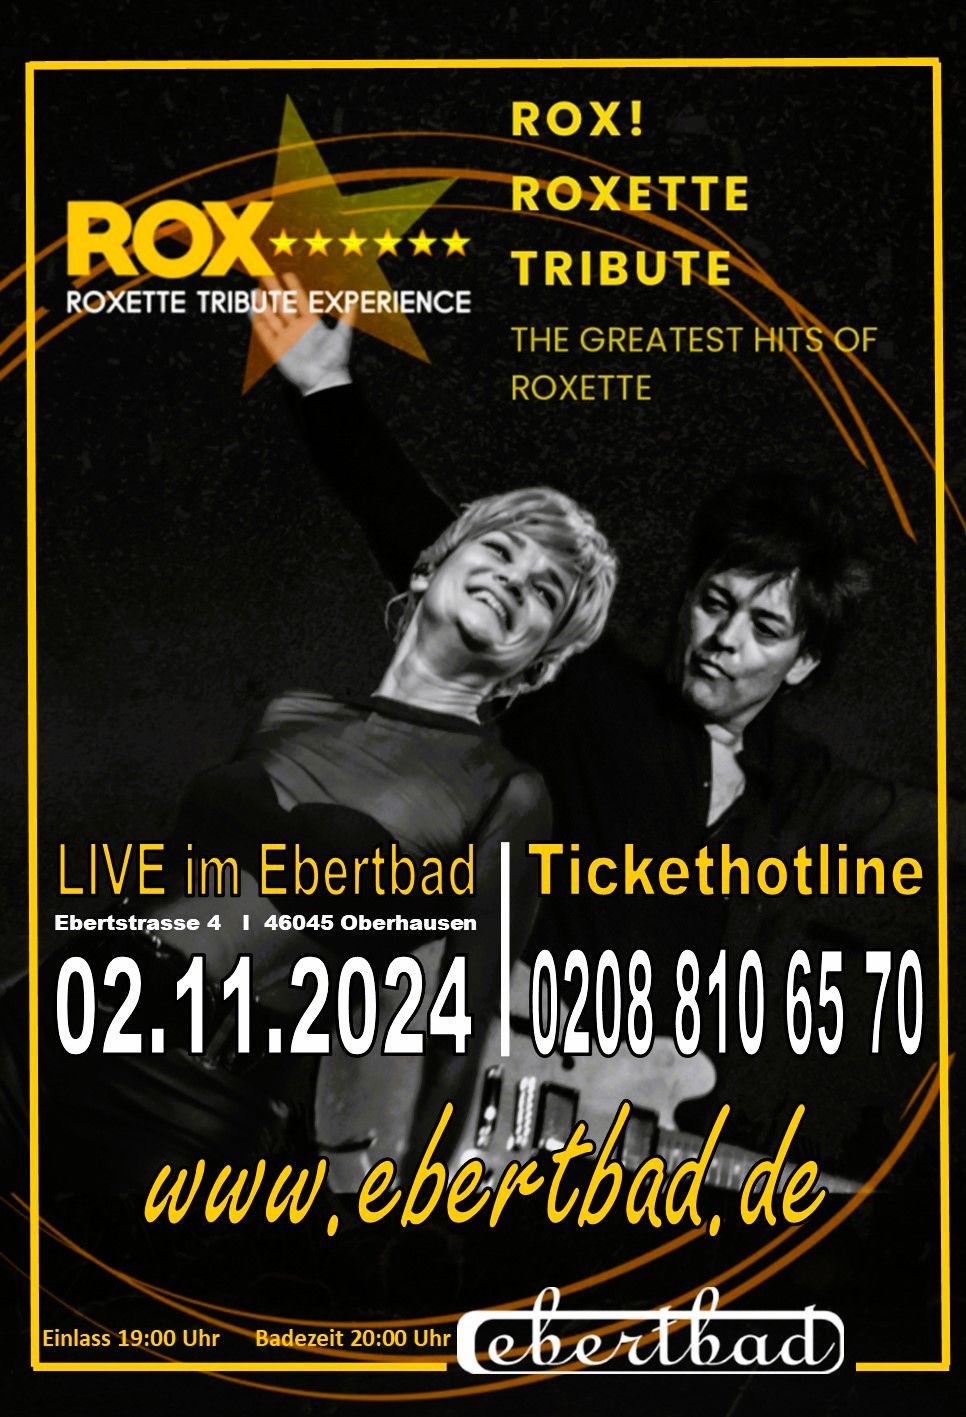 ROX-The ultimate ROXETTE Tribute Show